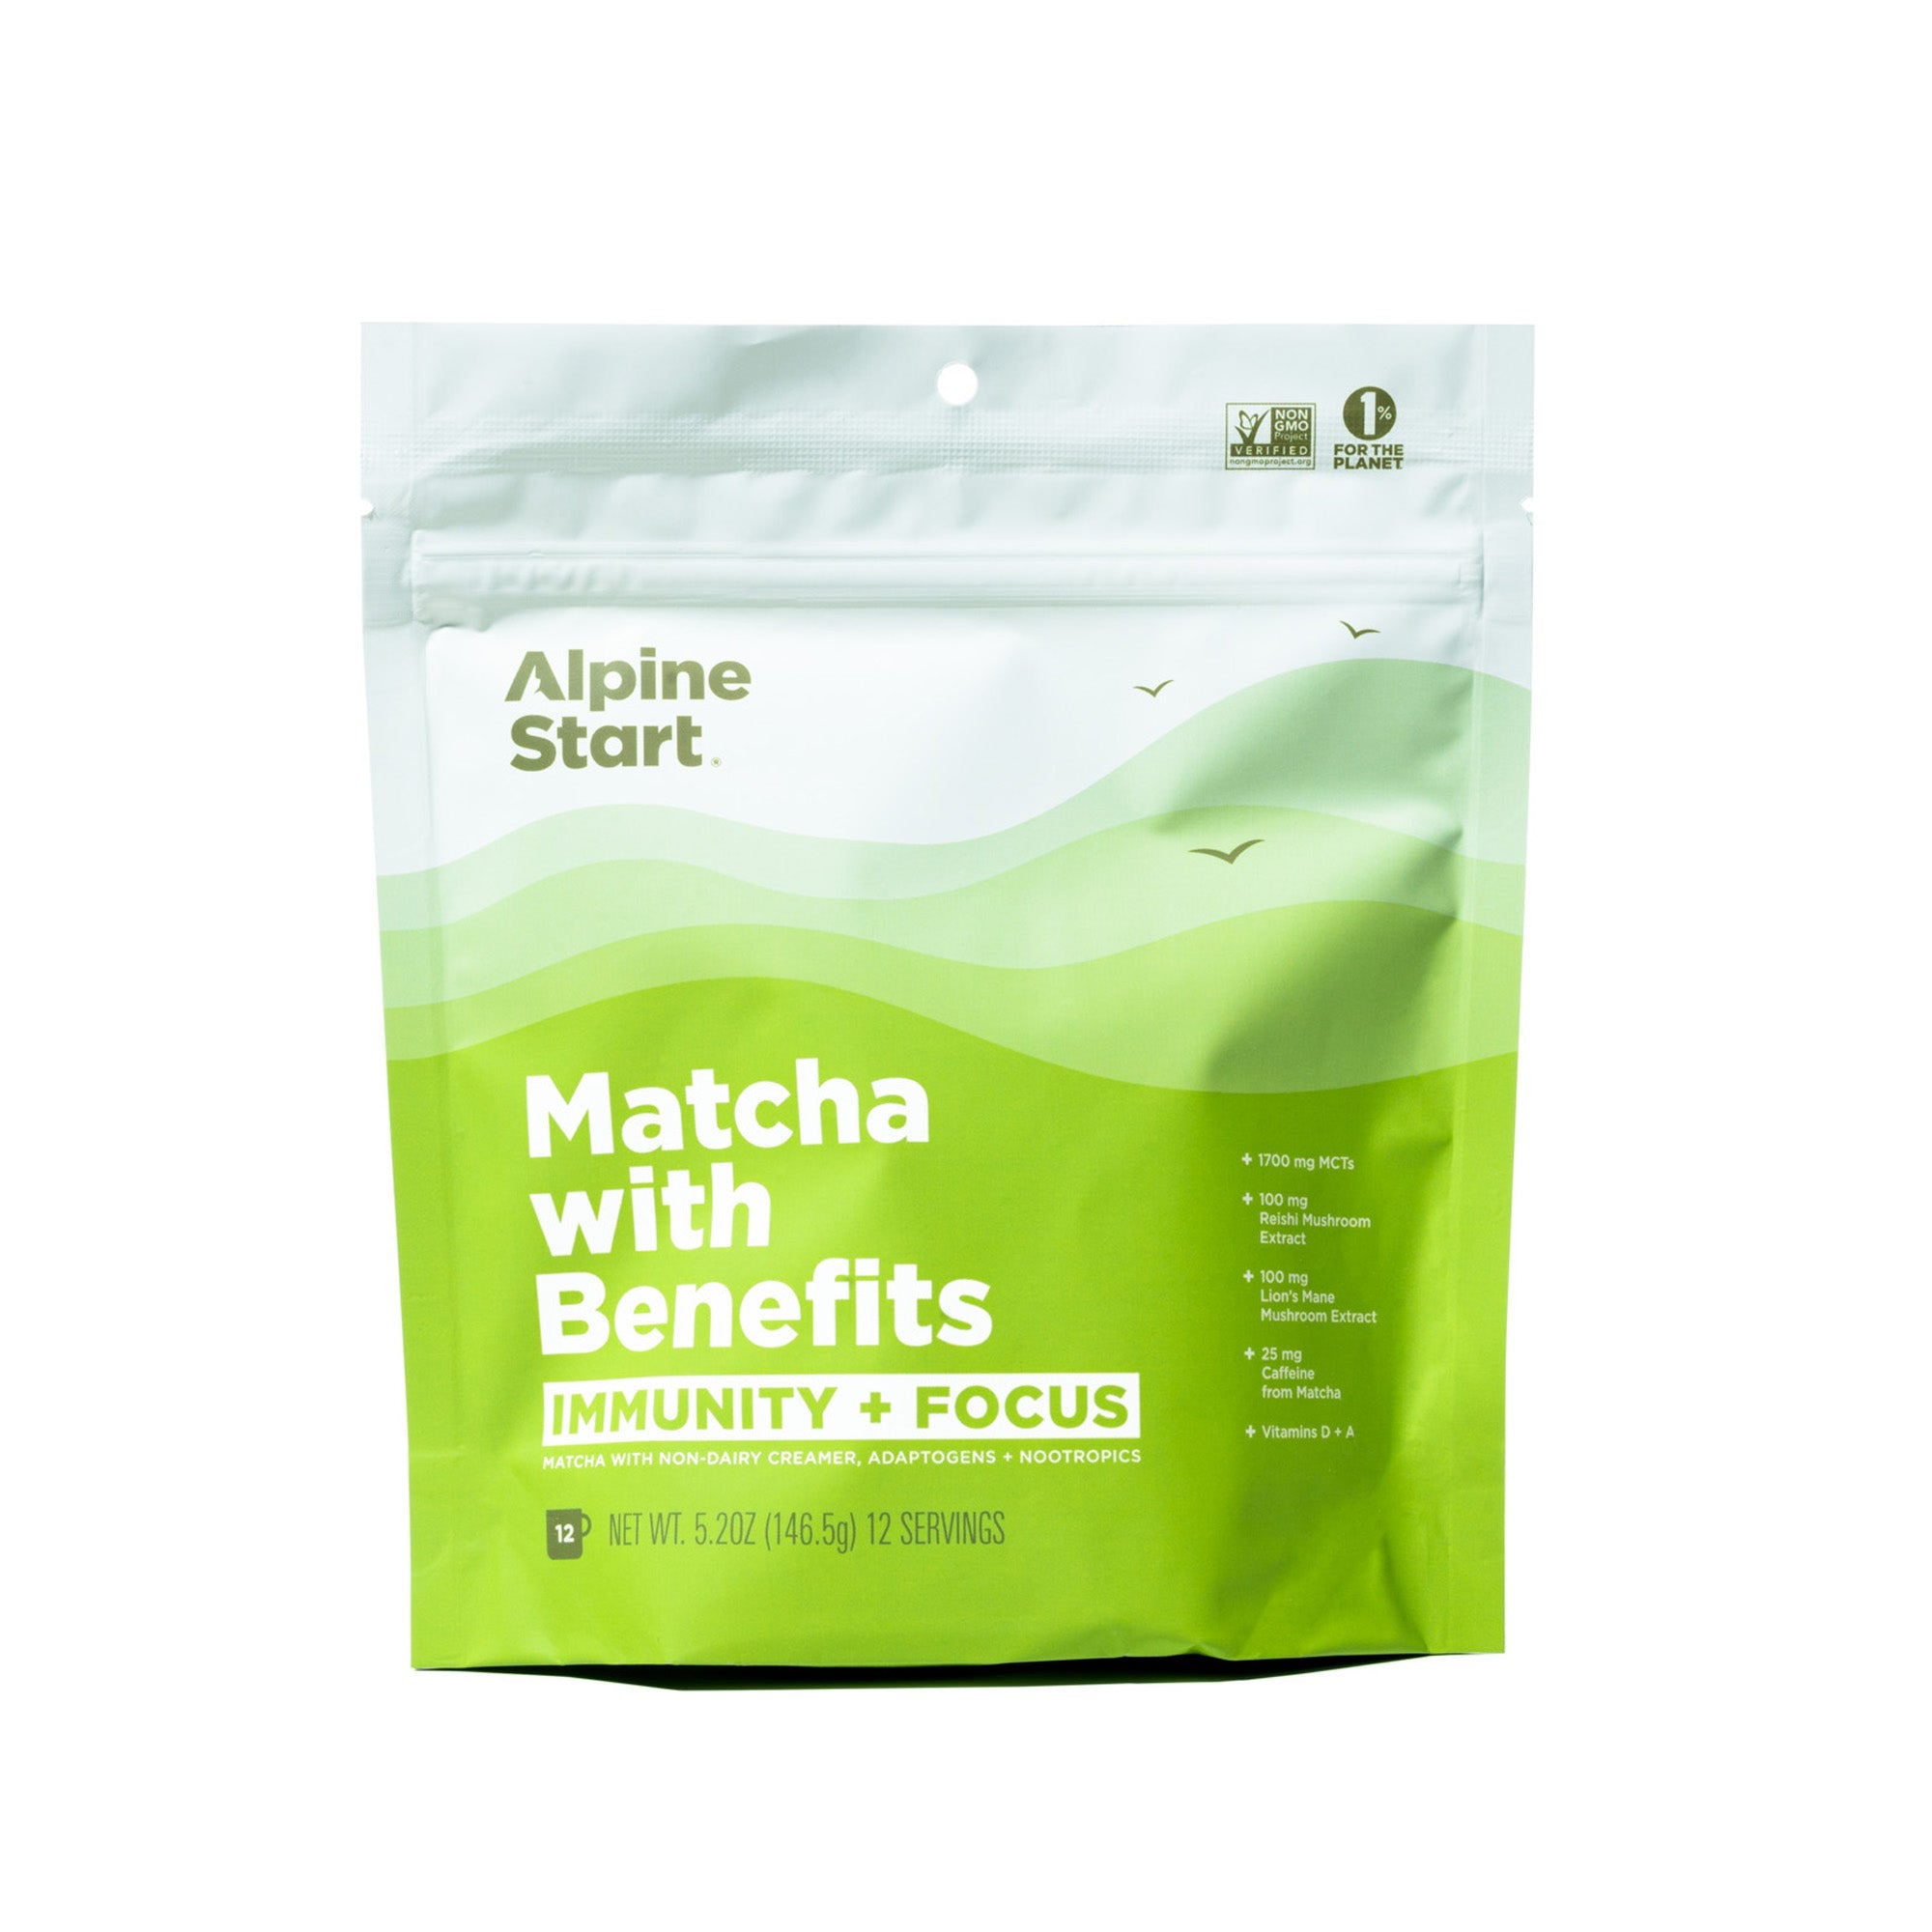 Matcha With Benefits - Alpine Start